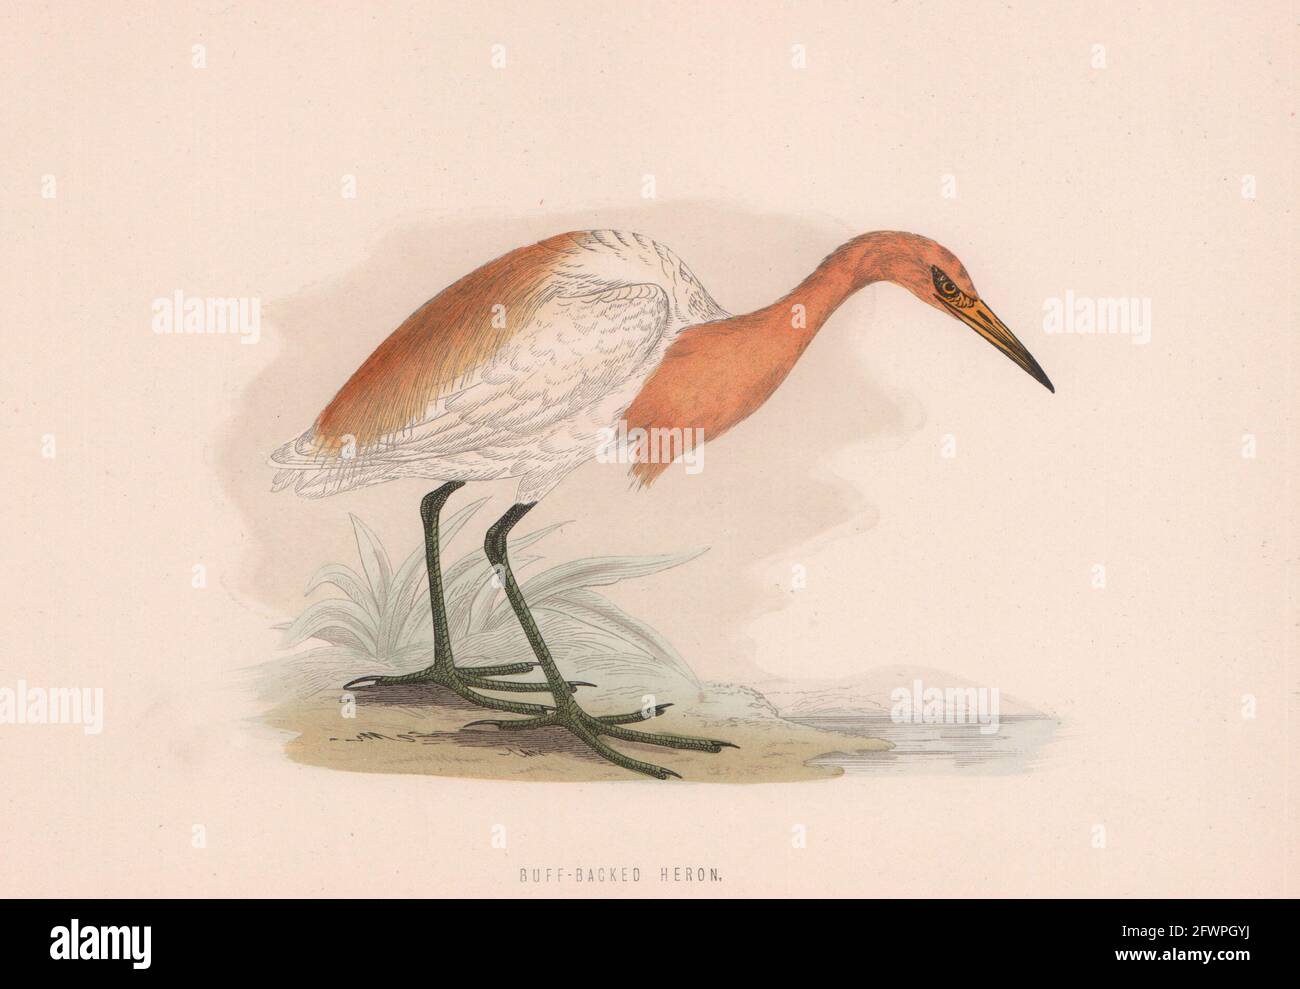 Buff-backed Heron. Morris's British Birds. Antik Farbdruck 1870 alt Stockfoto